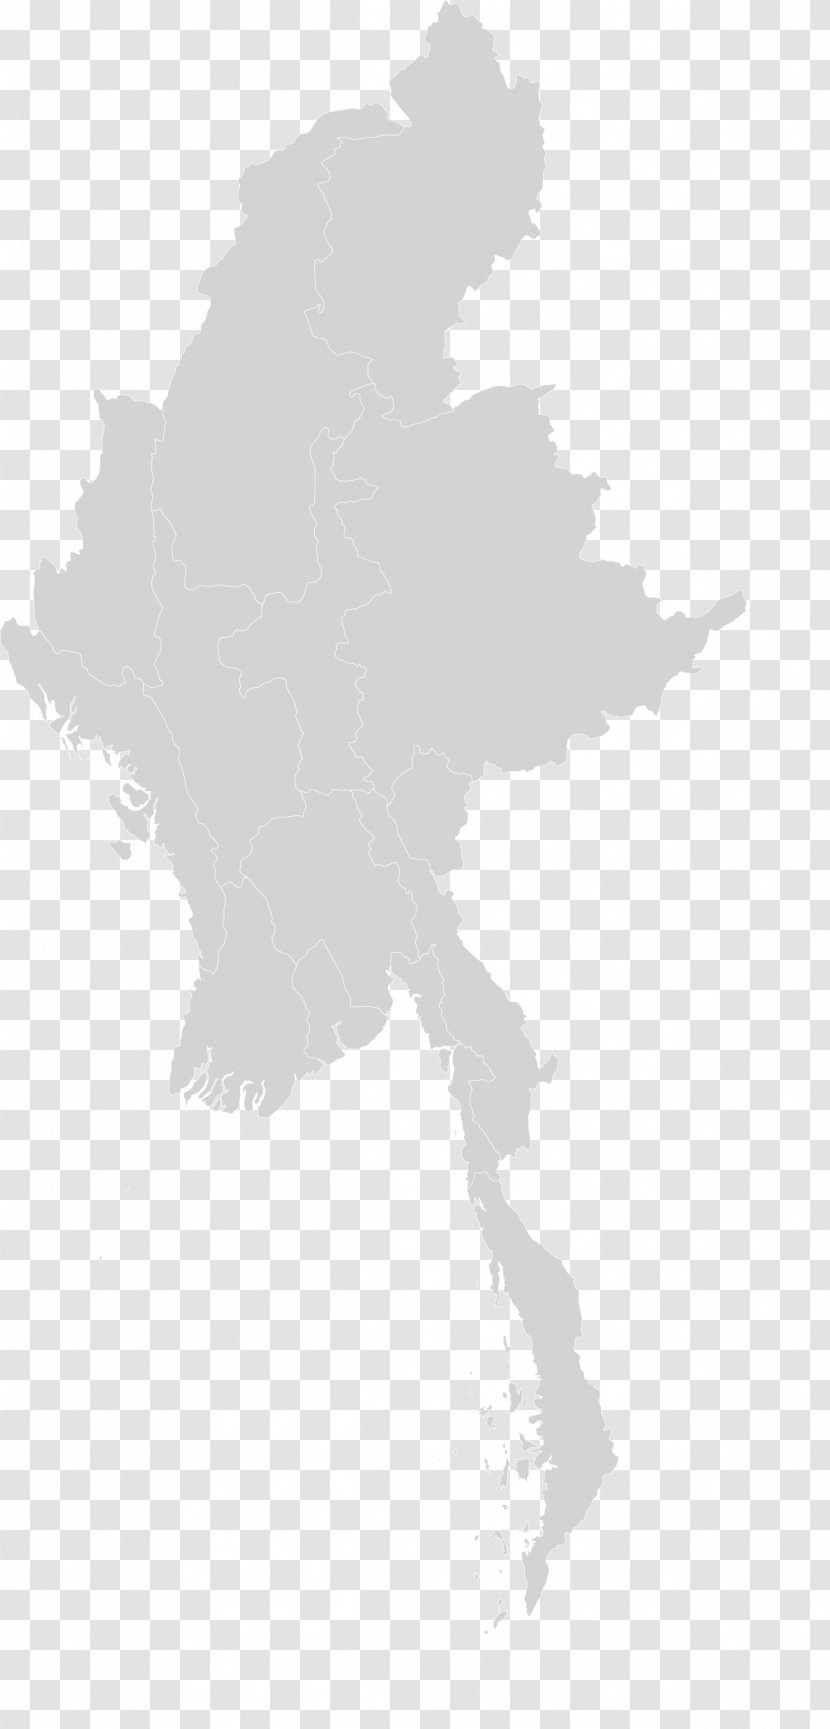 Burma Vector Map Royalty-free - Royaltyfree - Thumbtack Transparent PNG